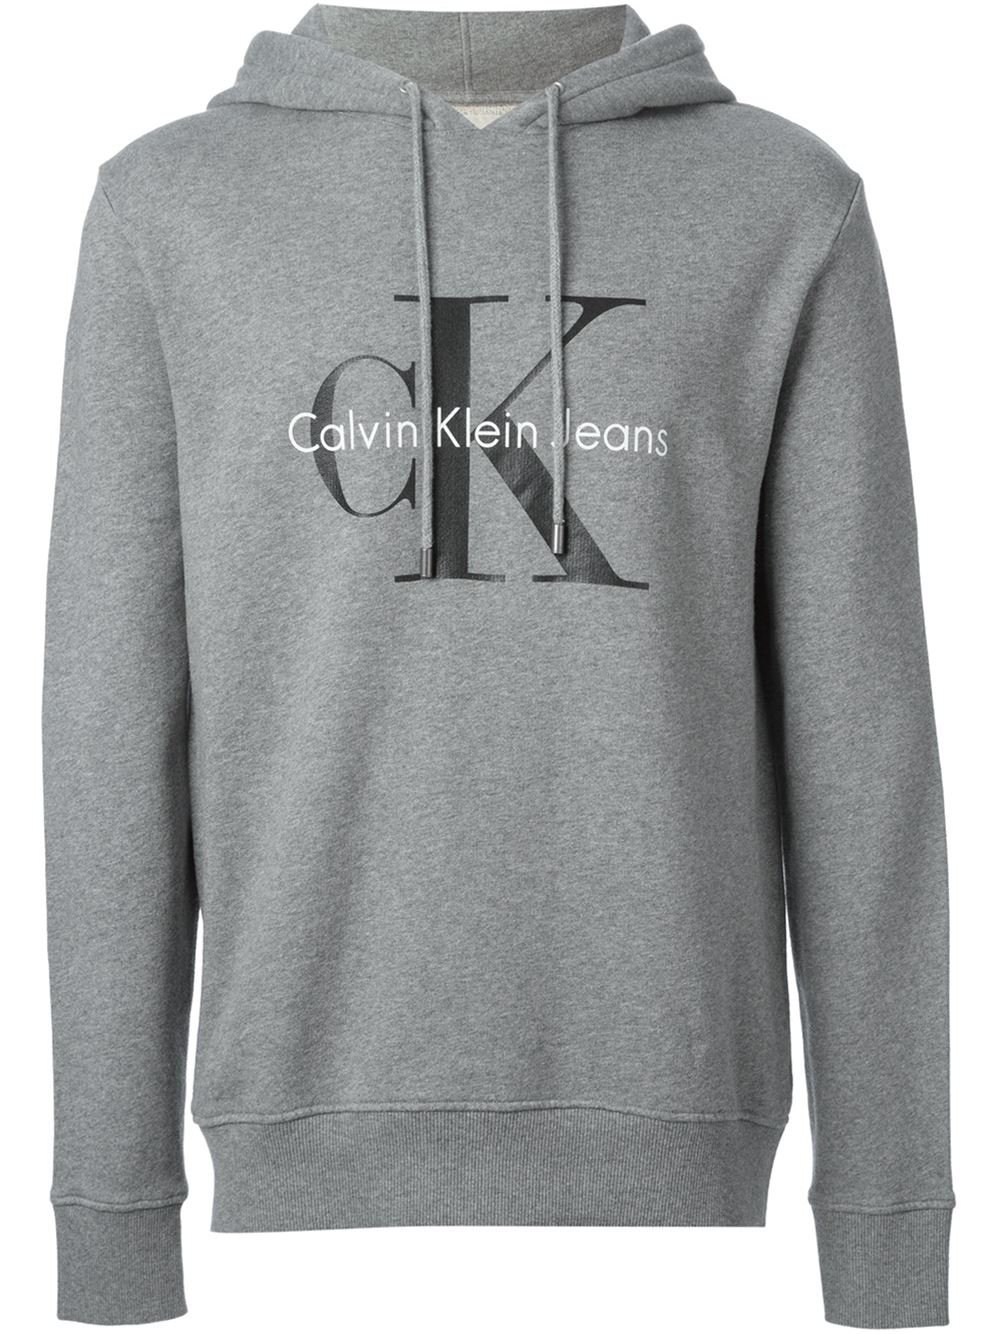 Calvin klein jeans Logo Print Hoodie in Gray for Men (grey) | Lyst